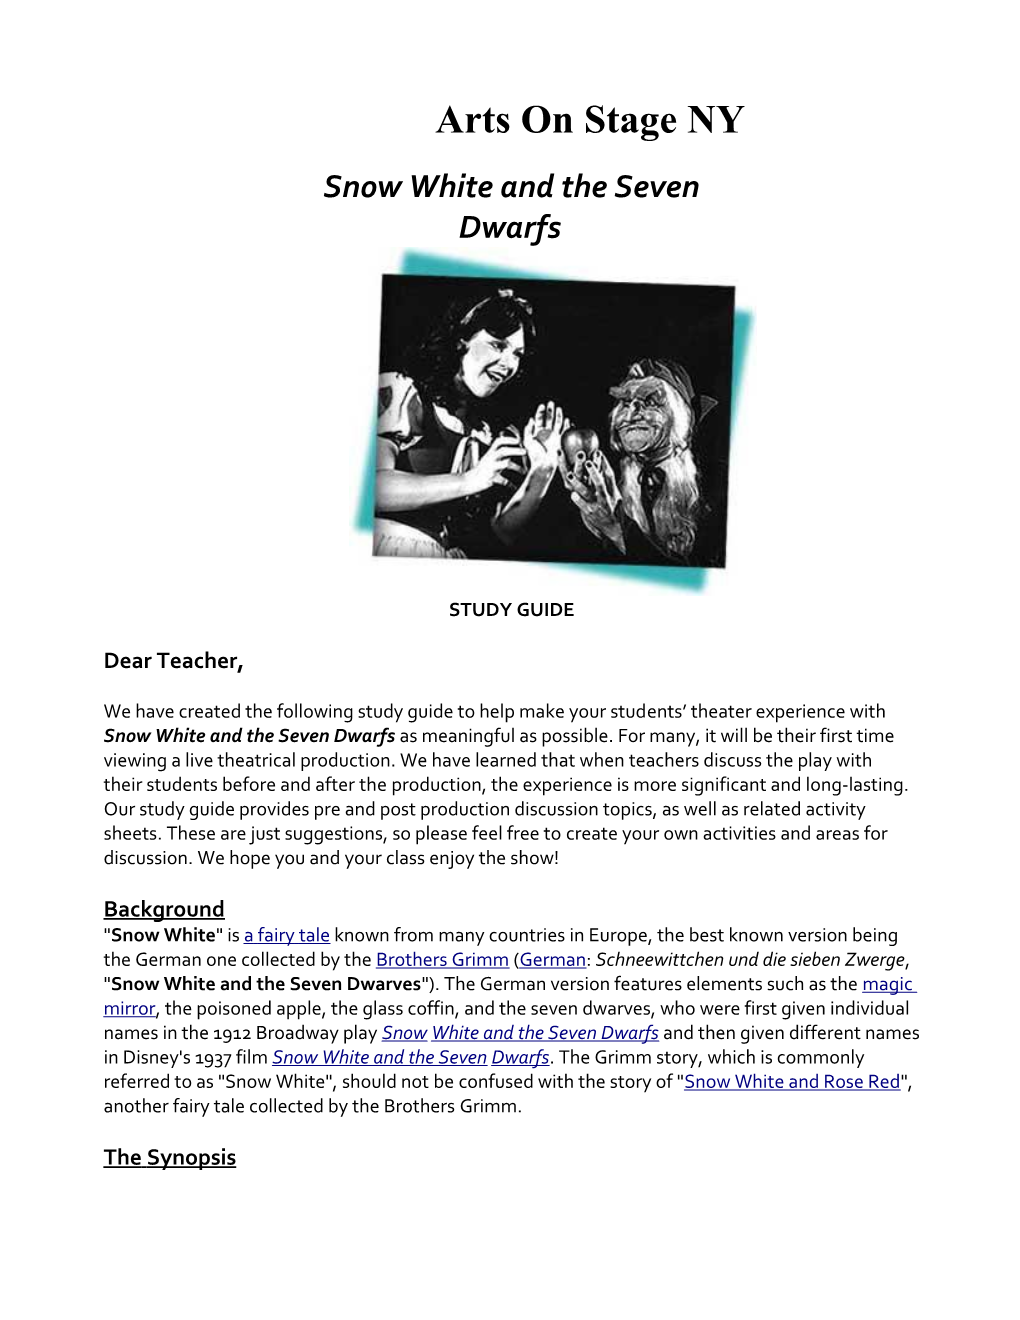 Snow White and the Sevendwarfs